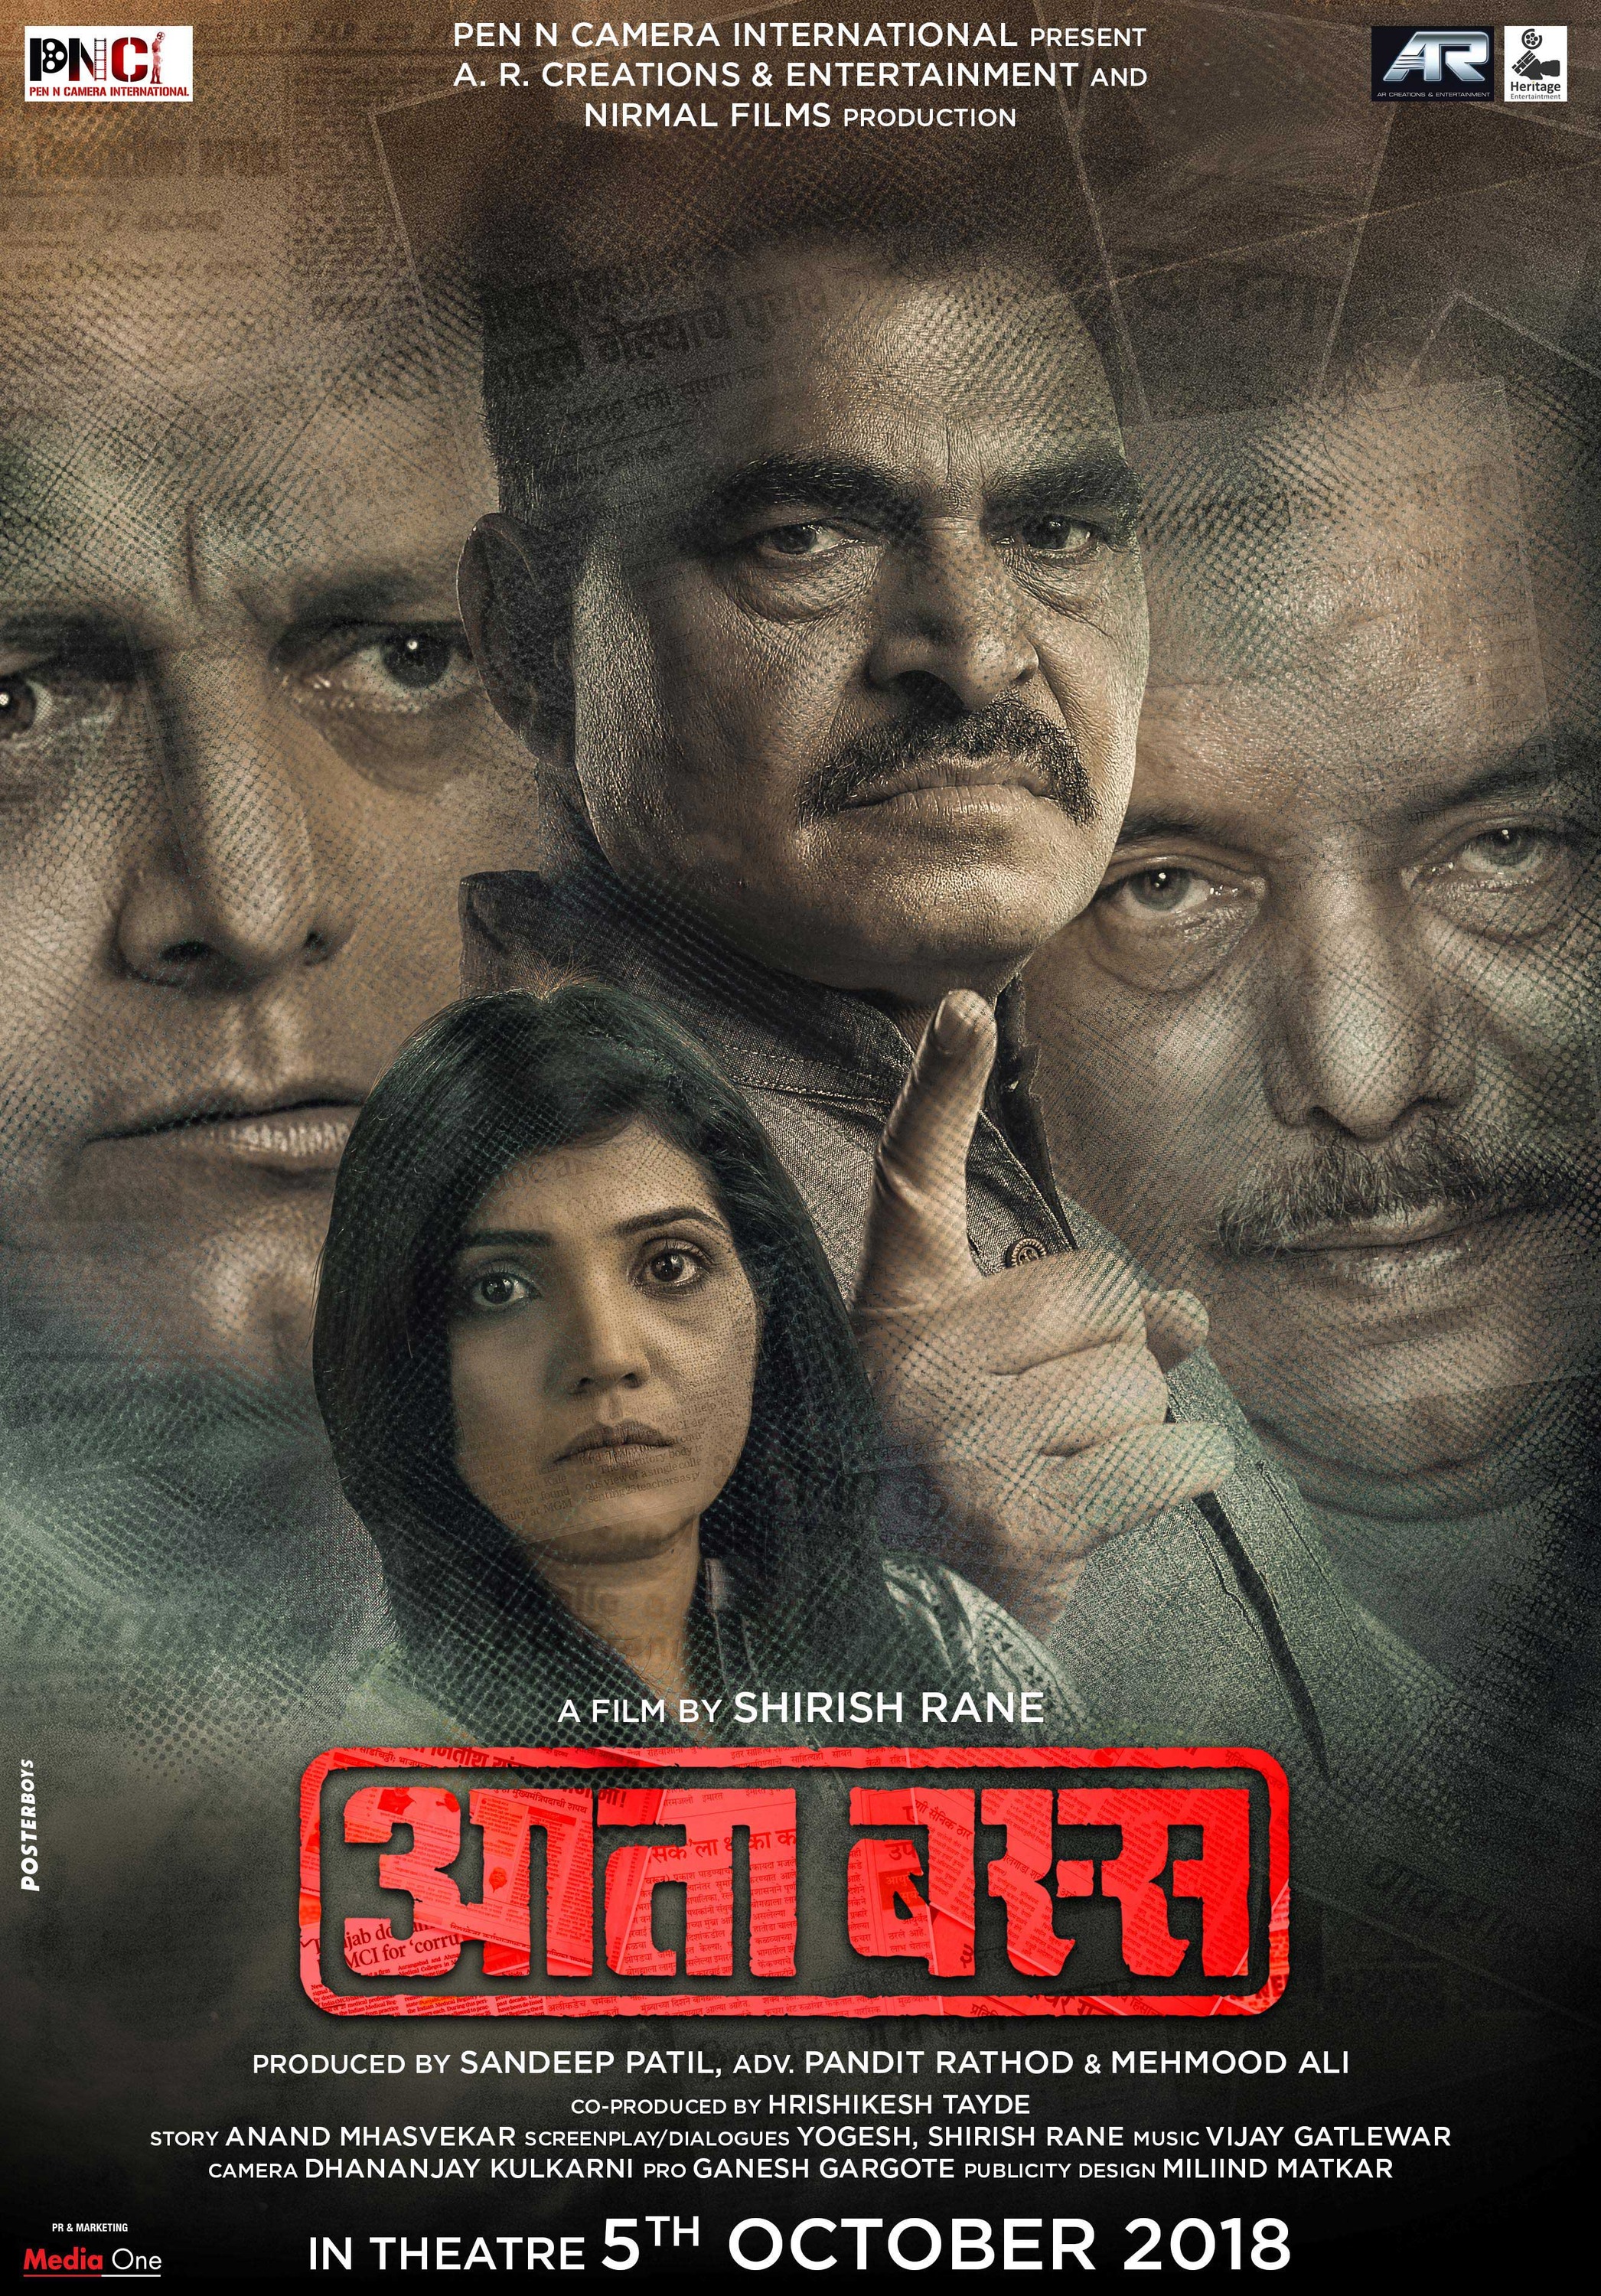 Mega Sized Movie Poster Image for Aata Baas 